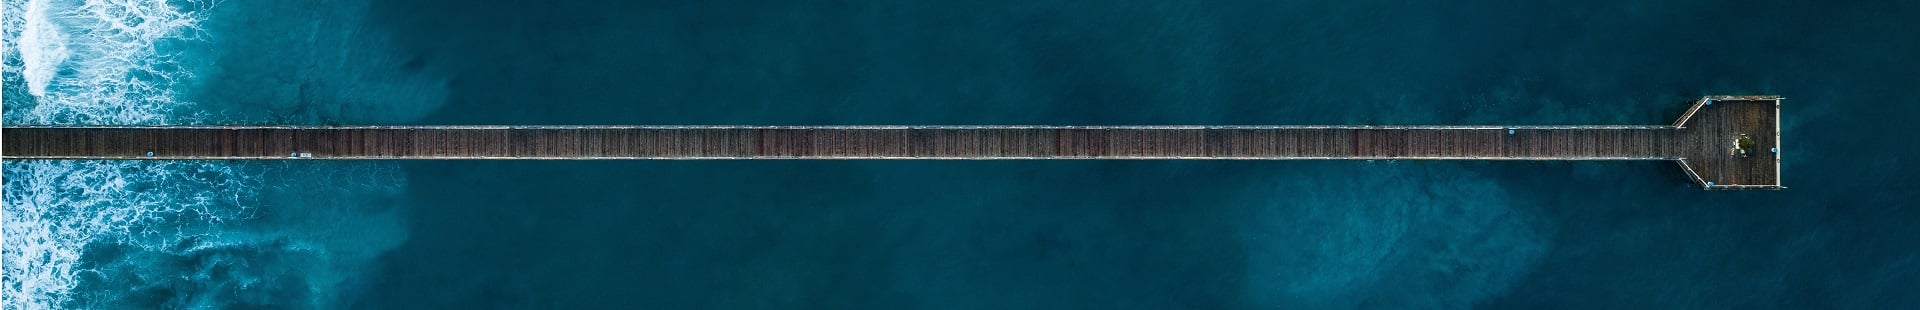 bnr-pier-in-ocean-viewed-from-above-01-variation-01